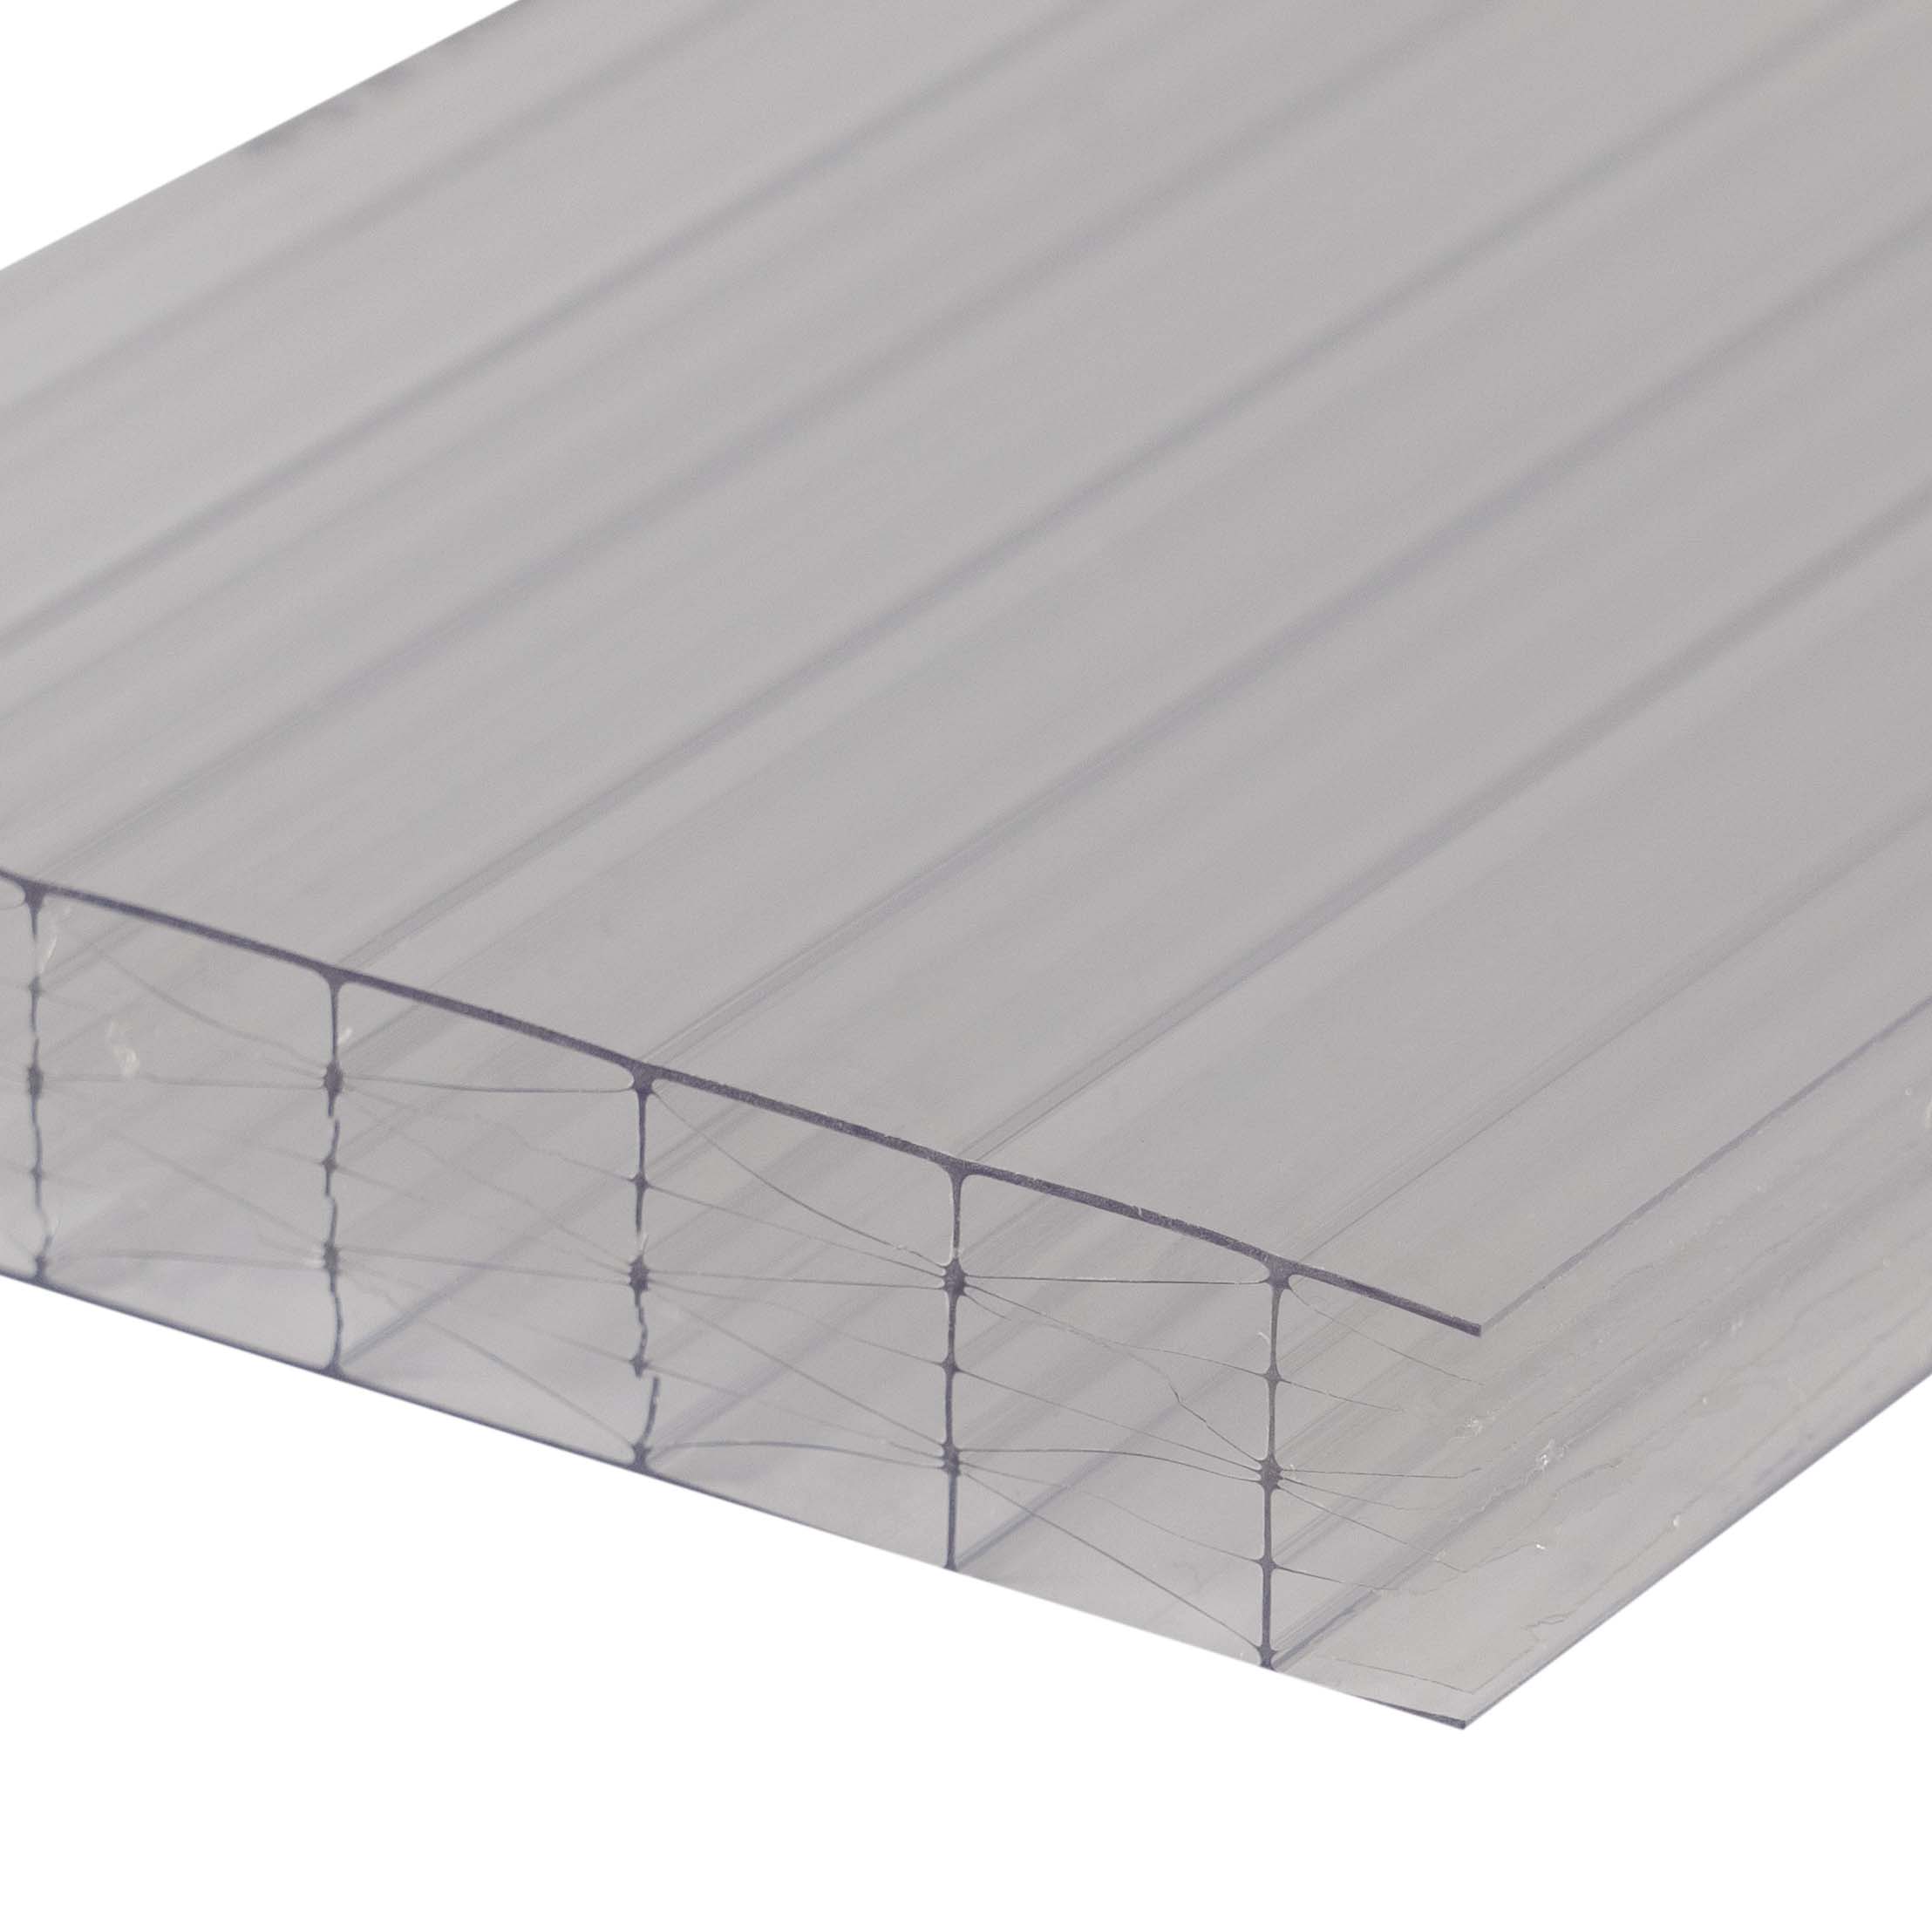 Stegplatte 25 mm Farblos Klar - Polycarbonat Hohlkammerplatten Hagelfest & UV geschützt